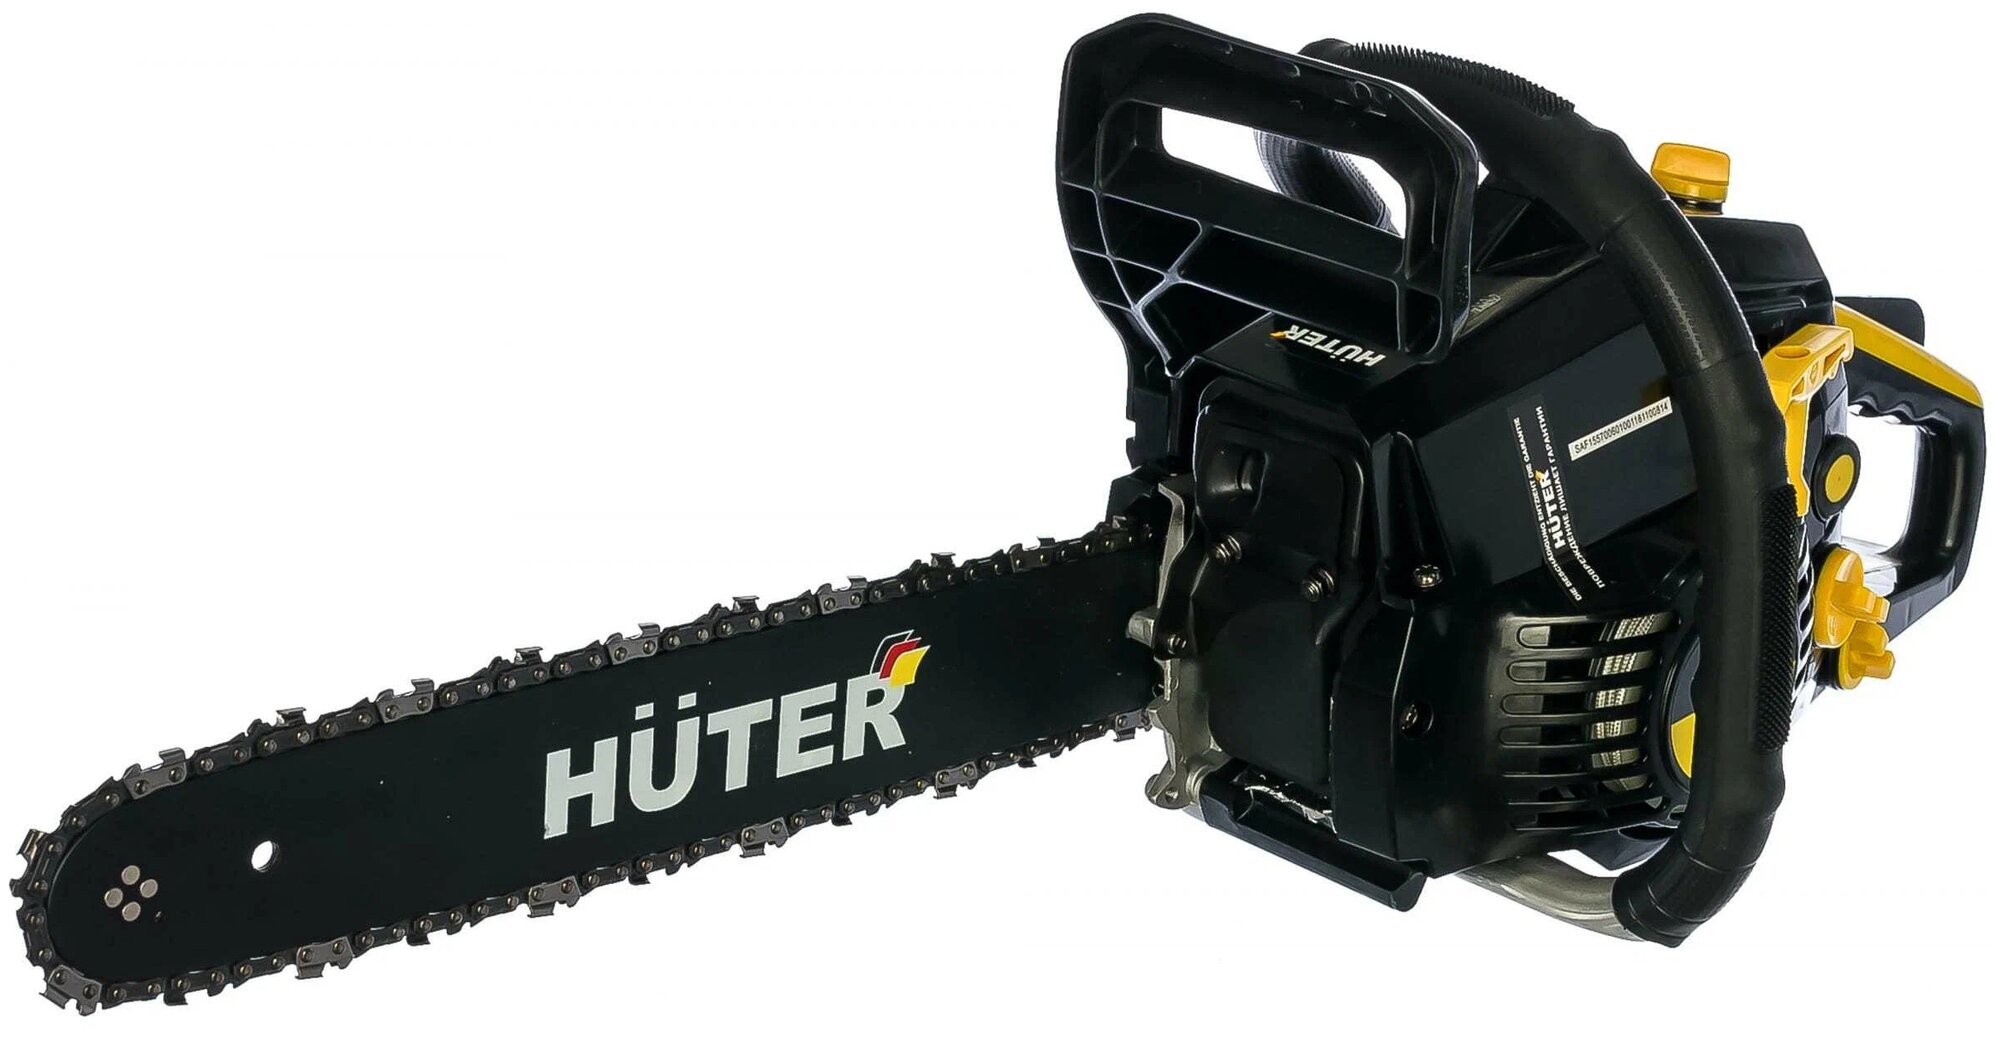   Huter BS-40 1500 